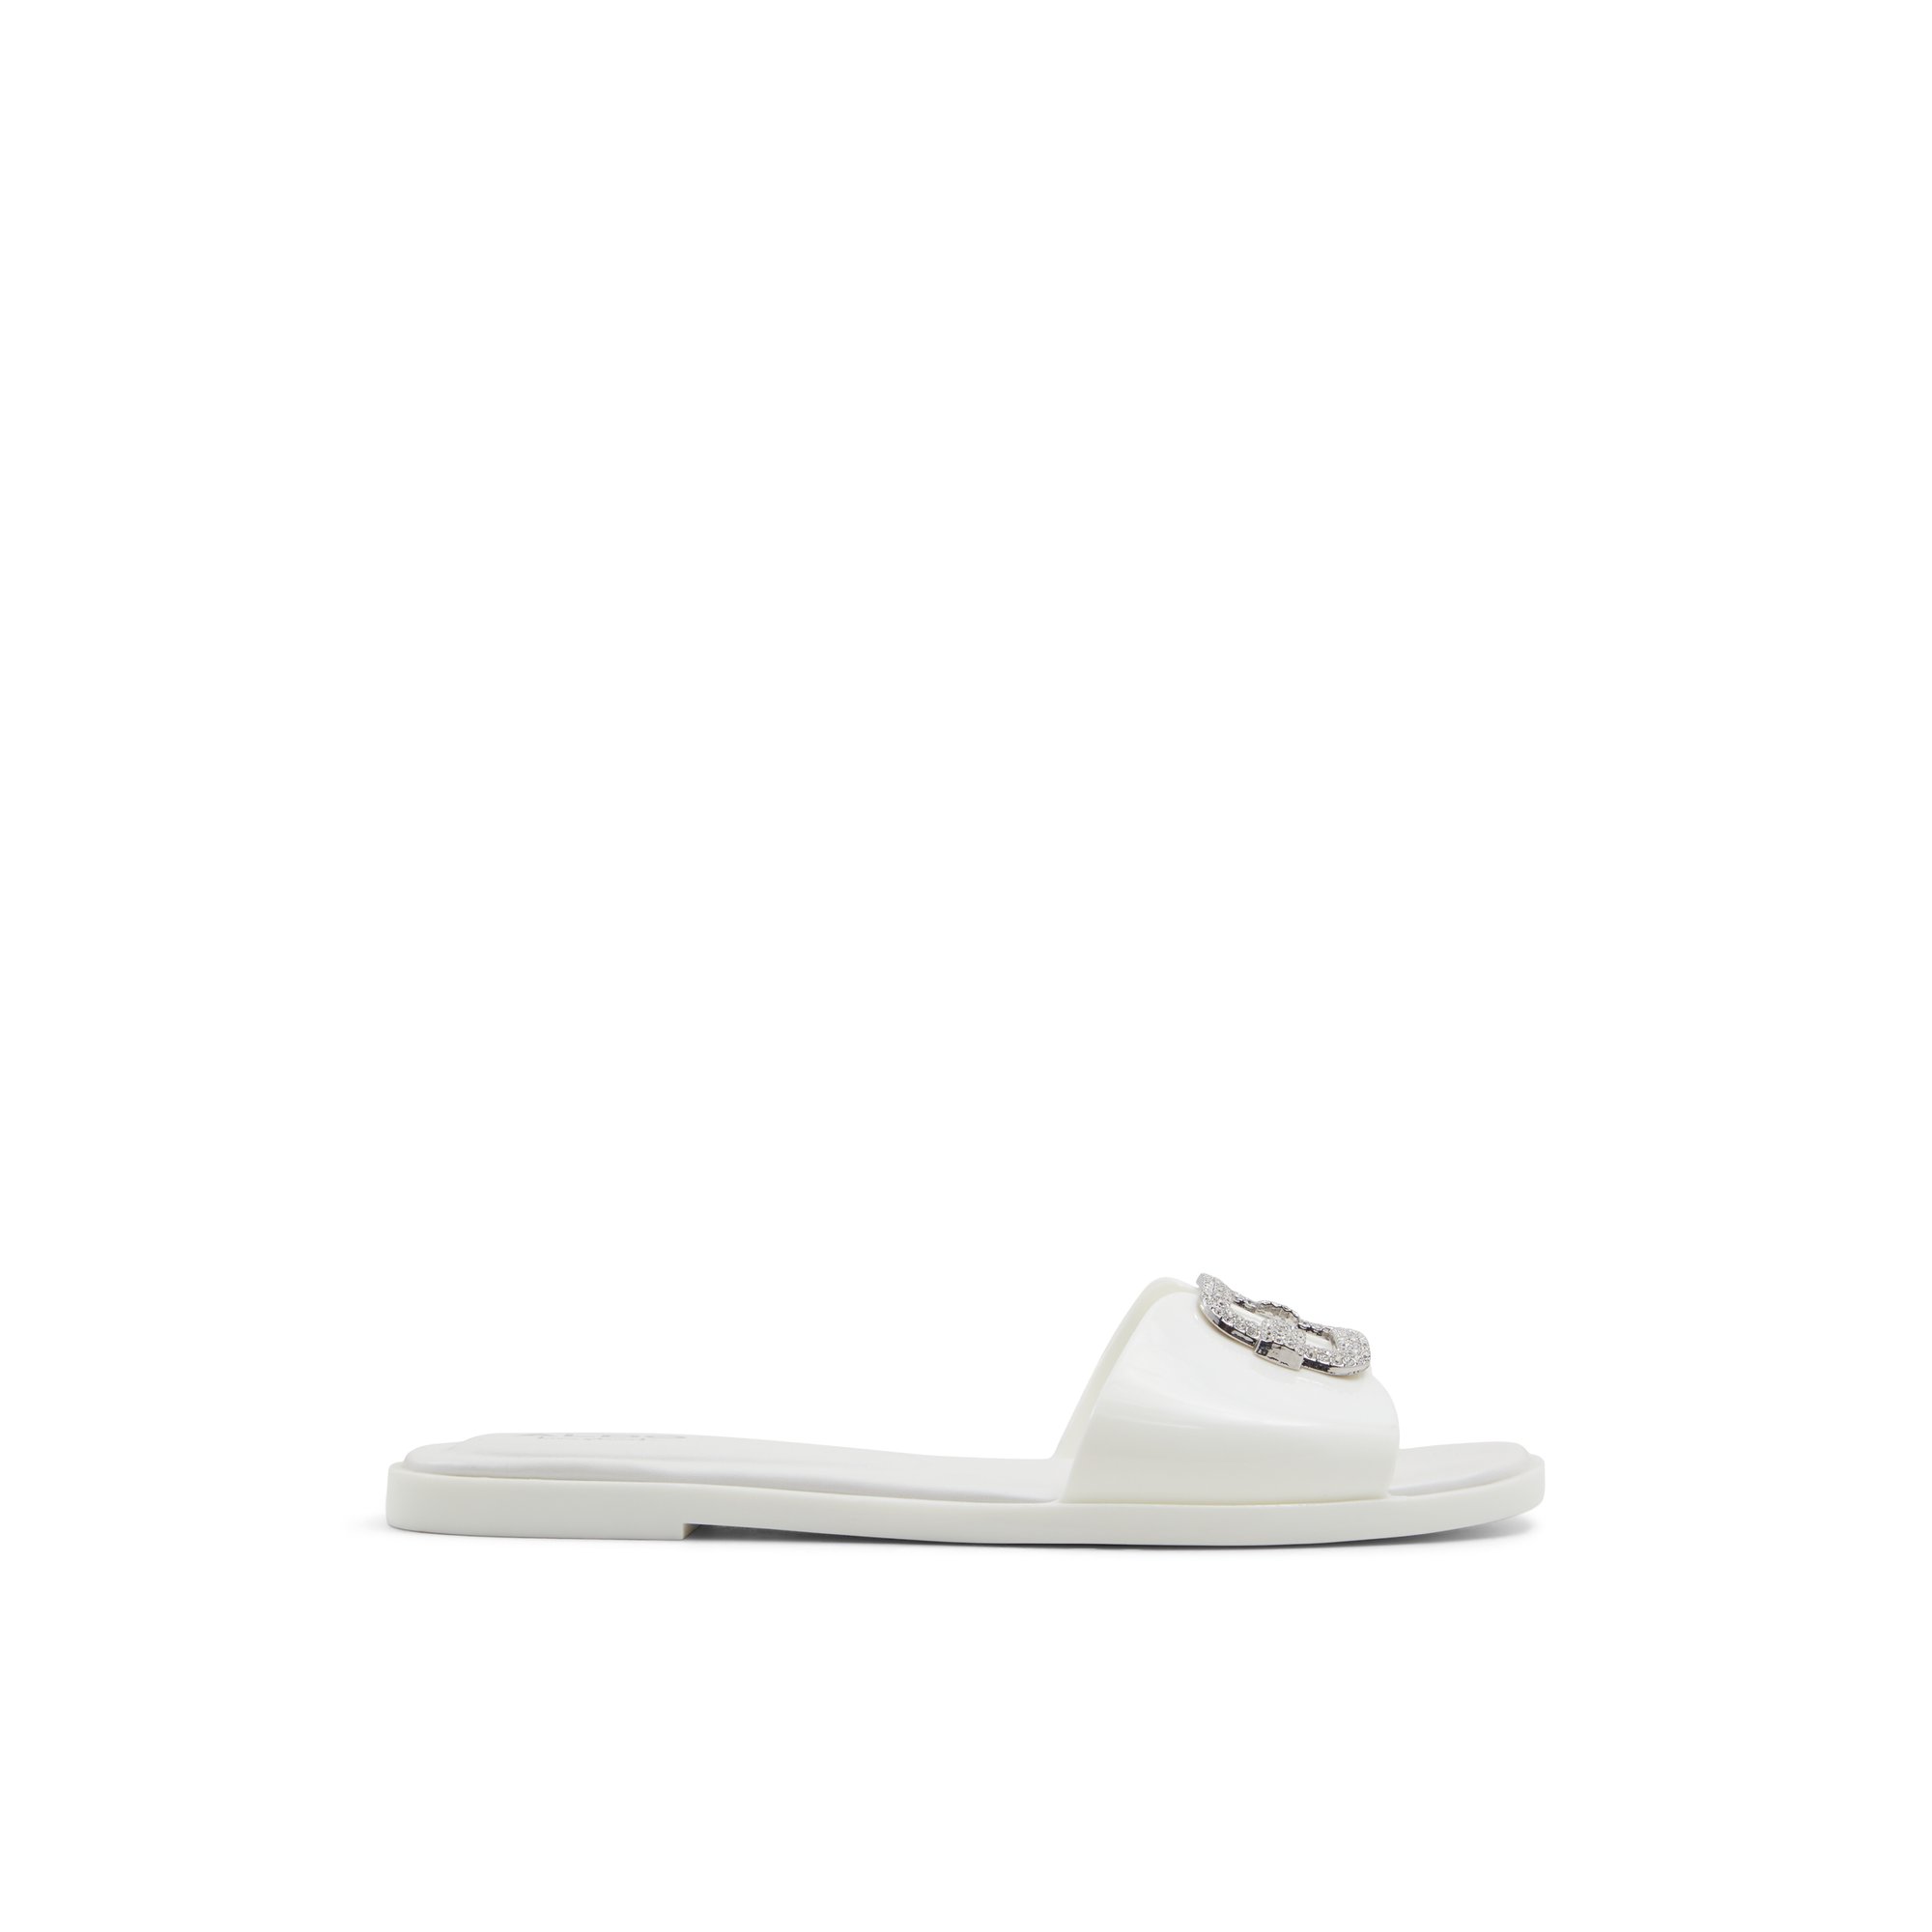 ALDO Jellyicious - Women's Flat Sandals - White